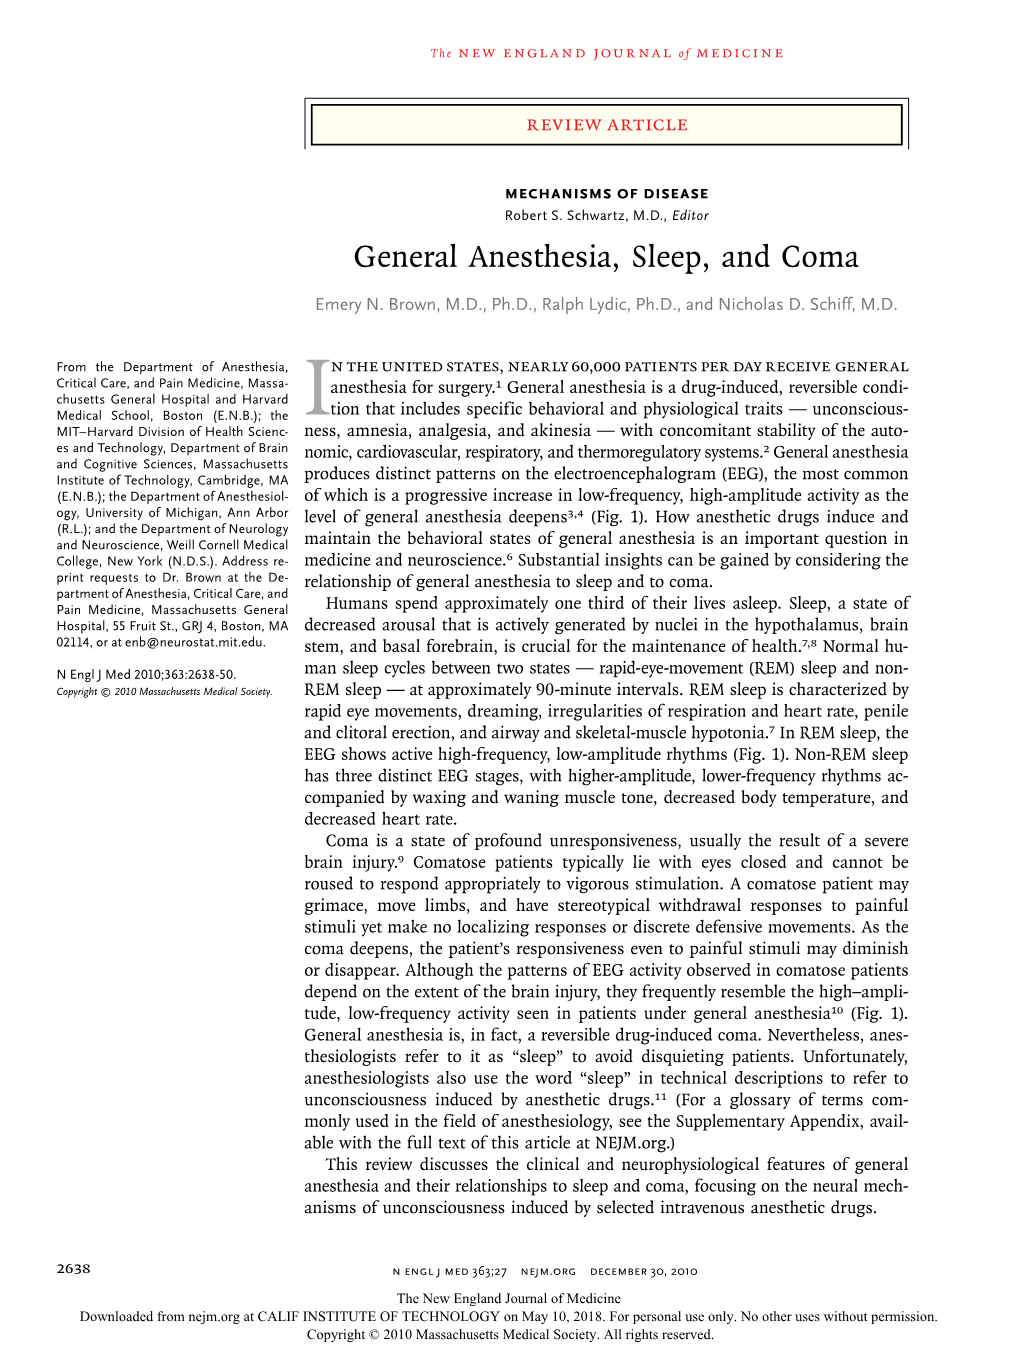 General Anesthesia, Sleep, and Coma